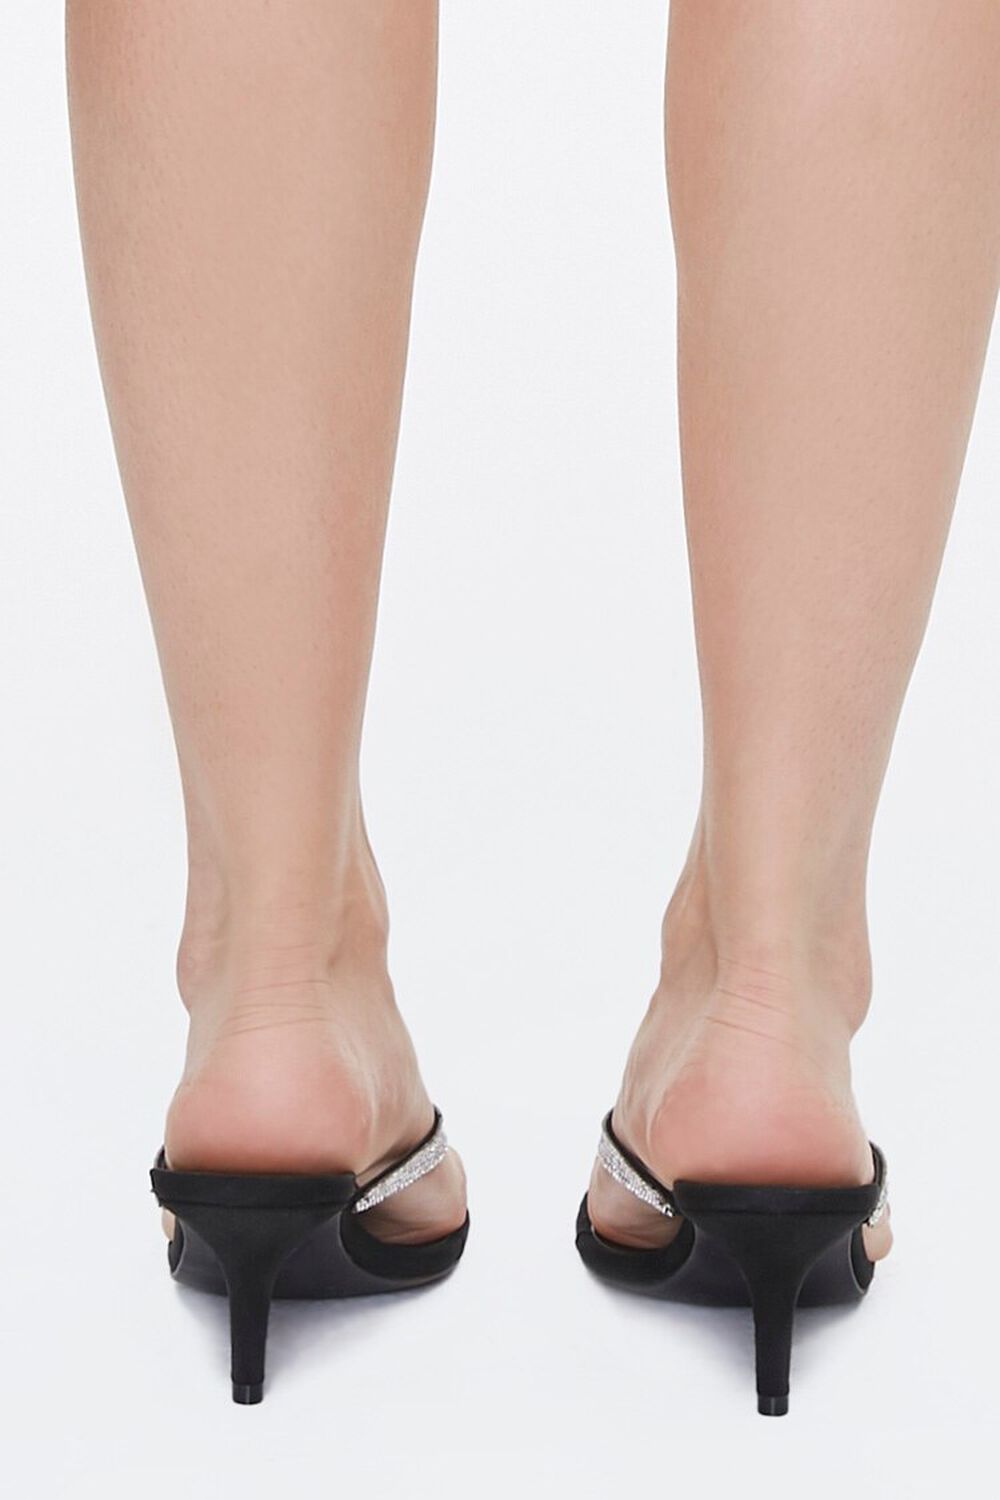 BLACK Rhinestone Toe-Thong Heels, image 3